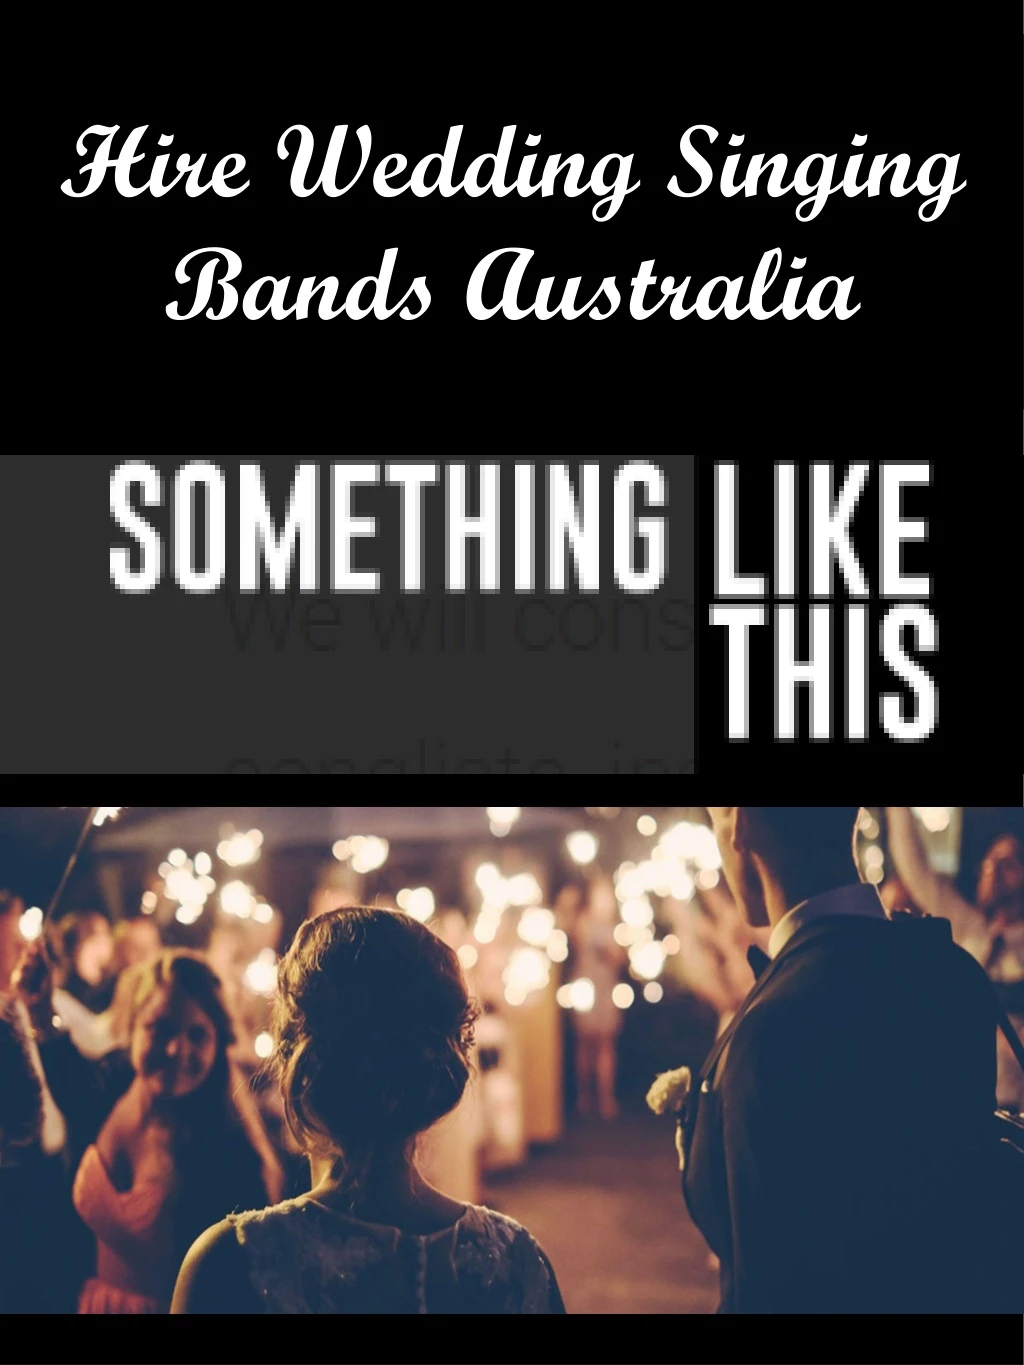 hire wedding singing bands australia